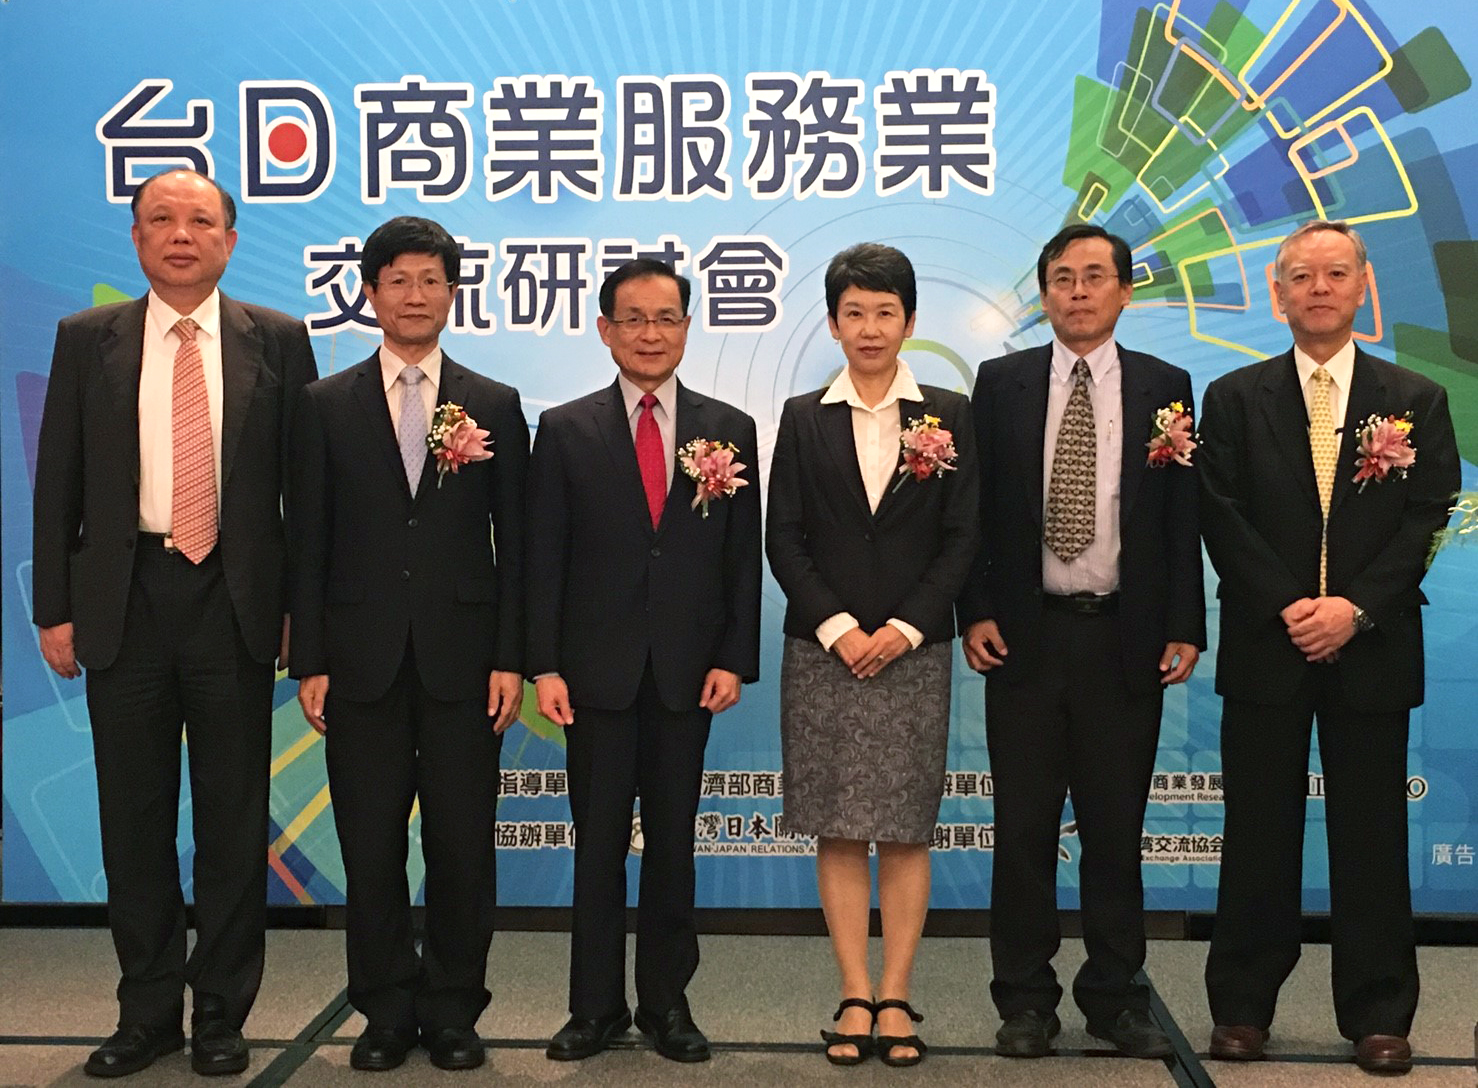 photo:Joint organized seminar with CDRI, Taiwan